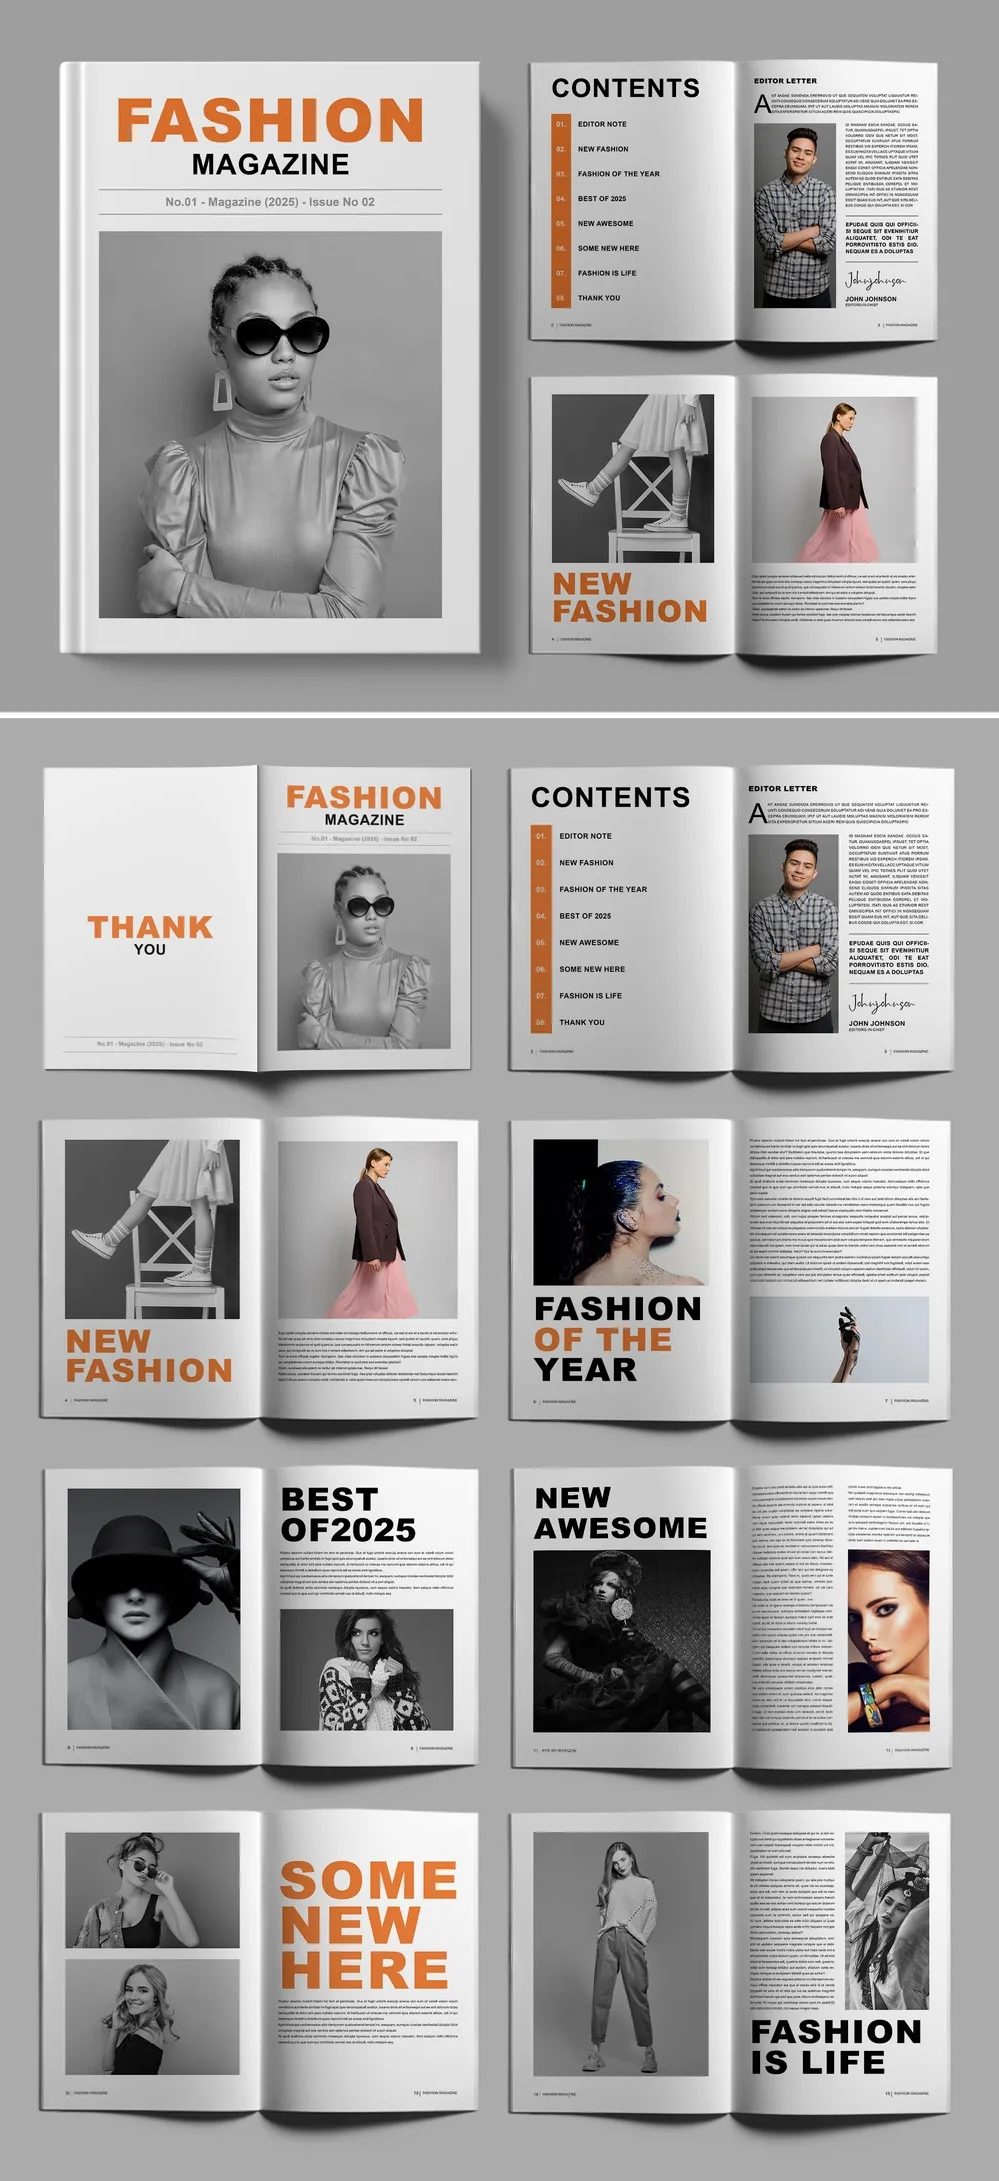 Adobestock - Fashion Magazine Template 718545708